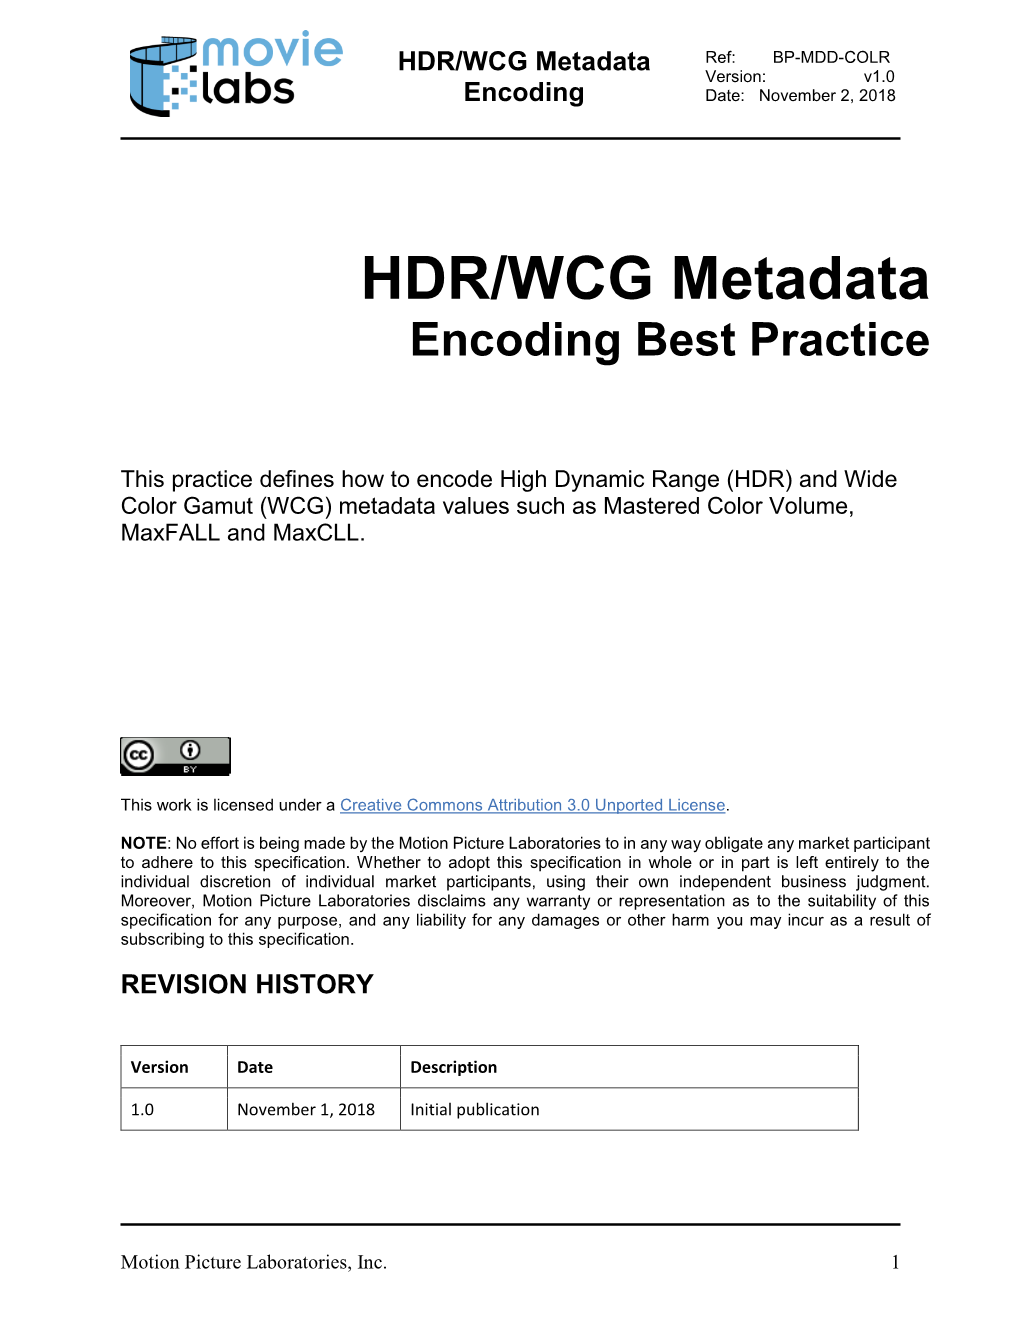 HDR/WCG Metadata Encoding Best Practice